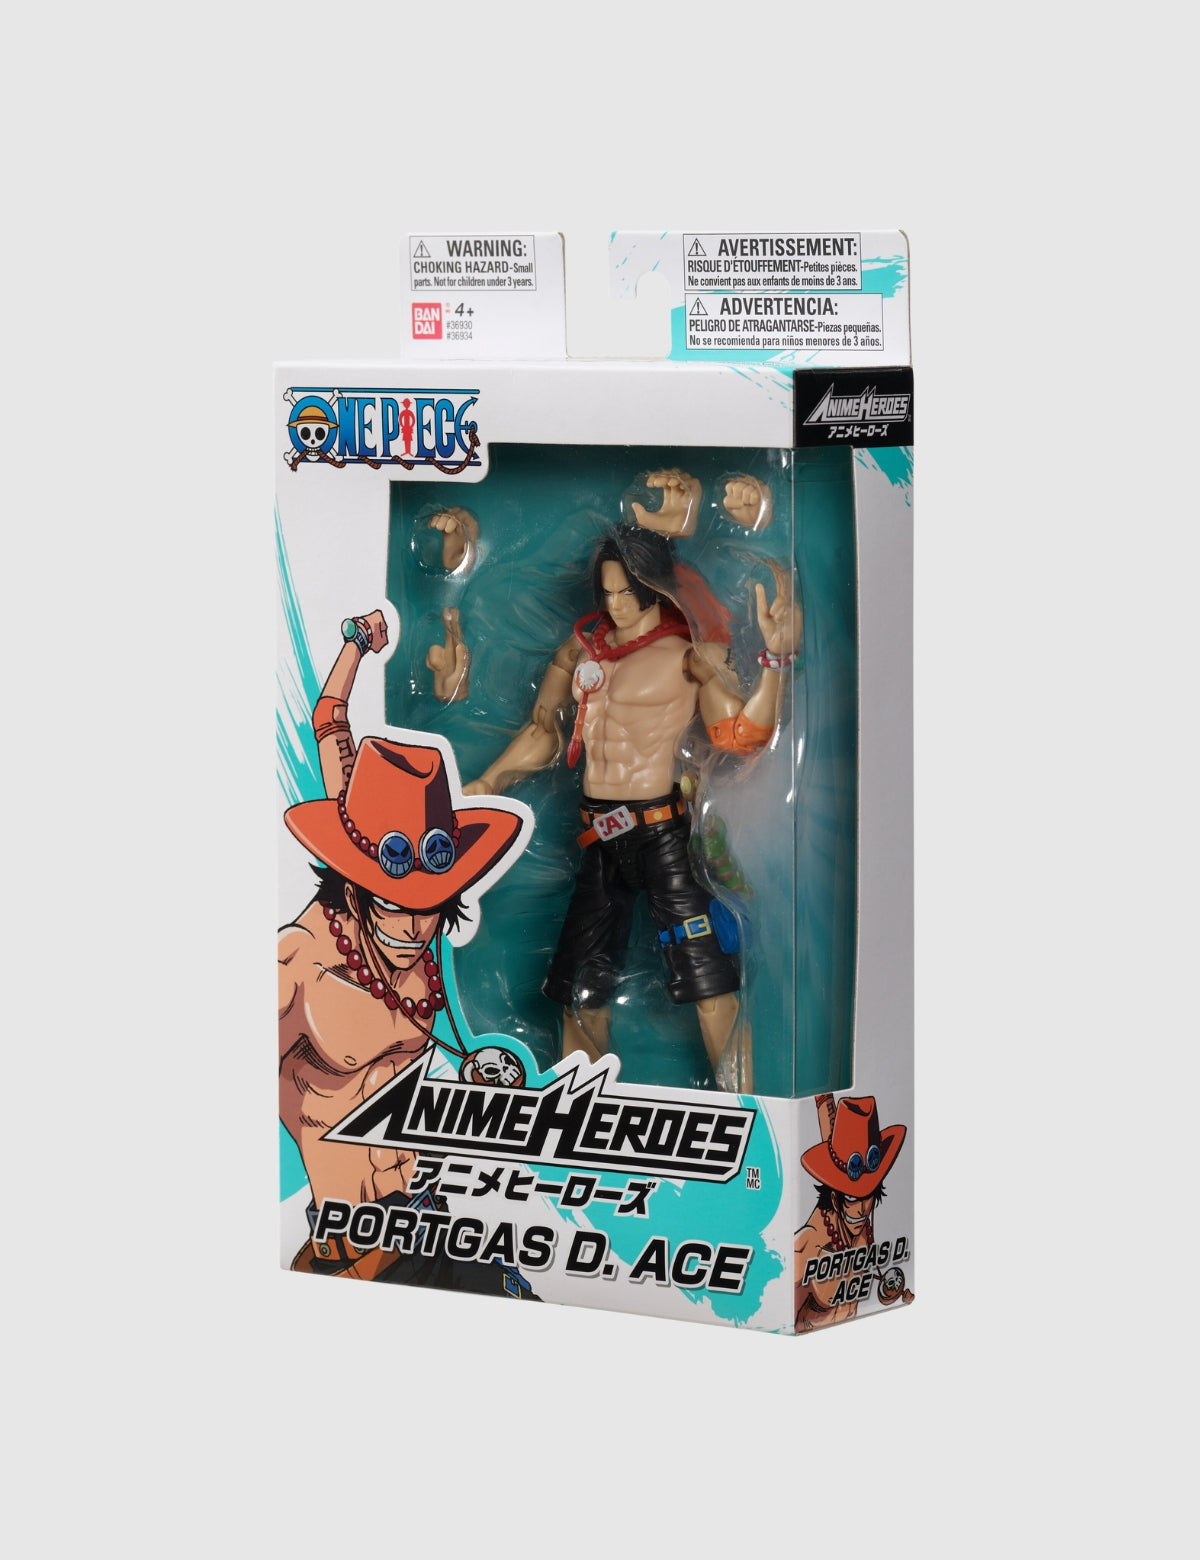 Bandai - Anime Heroes - One Piece - Figurine Anime heroes 7 cm